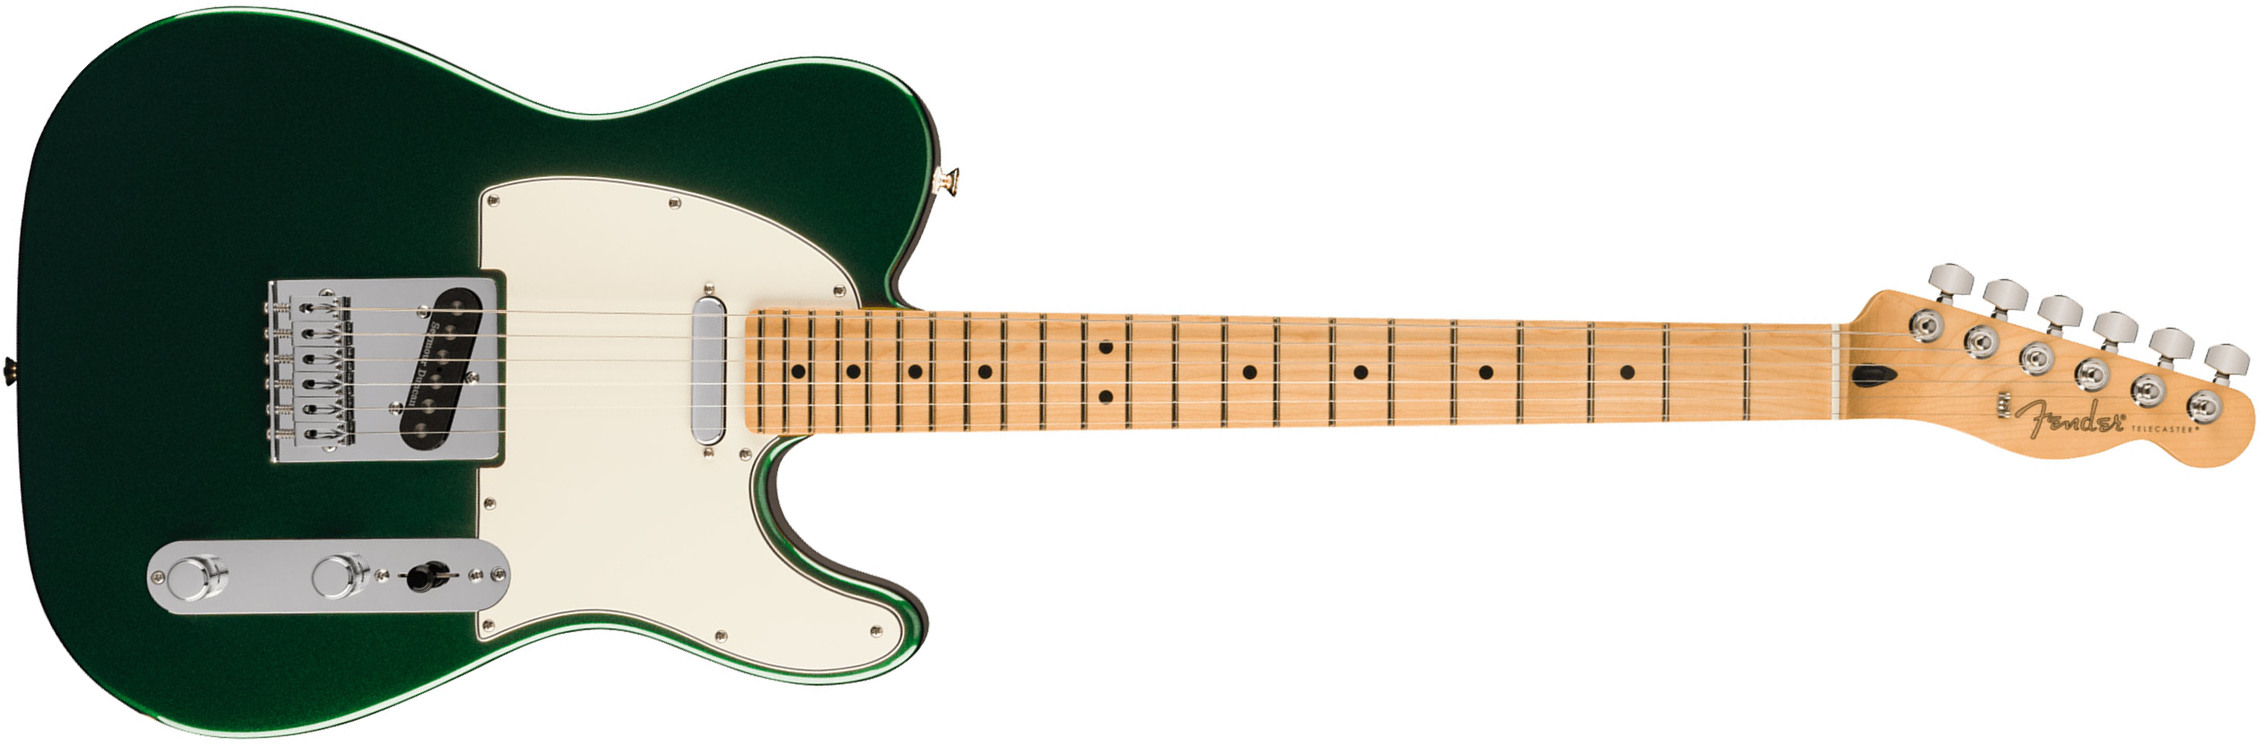 Fender Tele Player Ltd Mex 2s Seymour Duncan Mn - British Racing Green - Guitarra eléctrica con forma de tel - Main picture